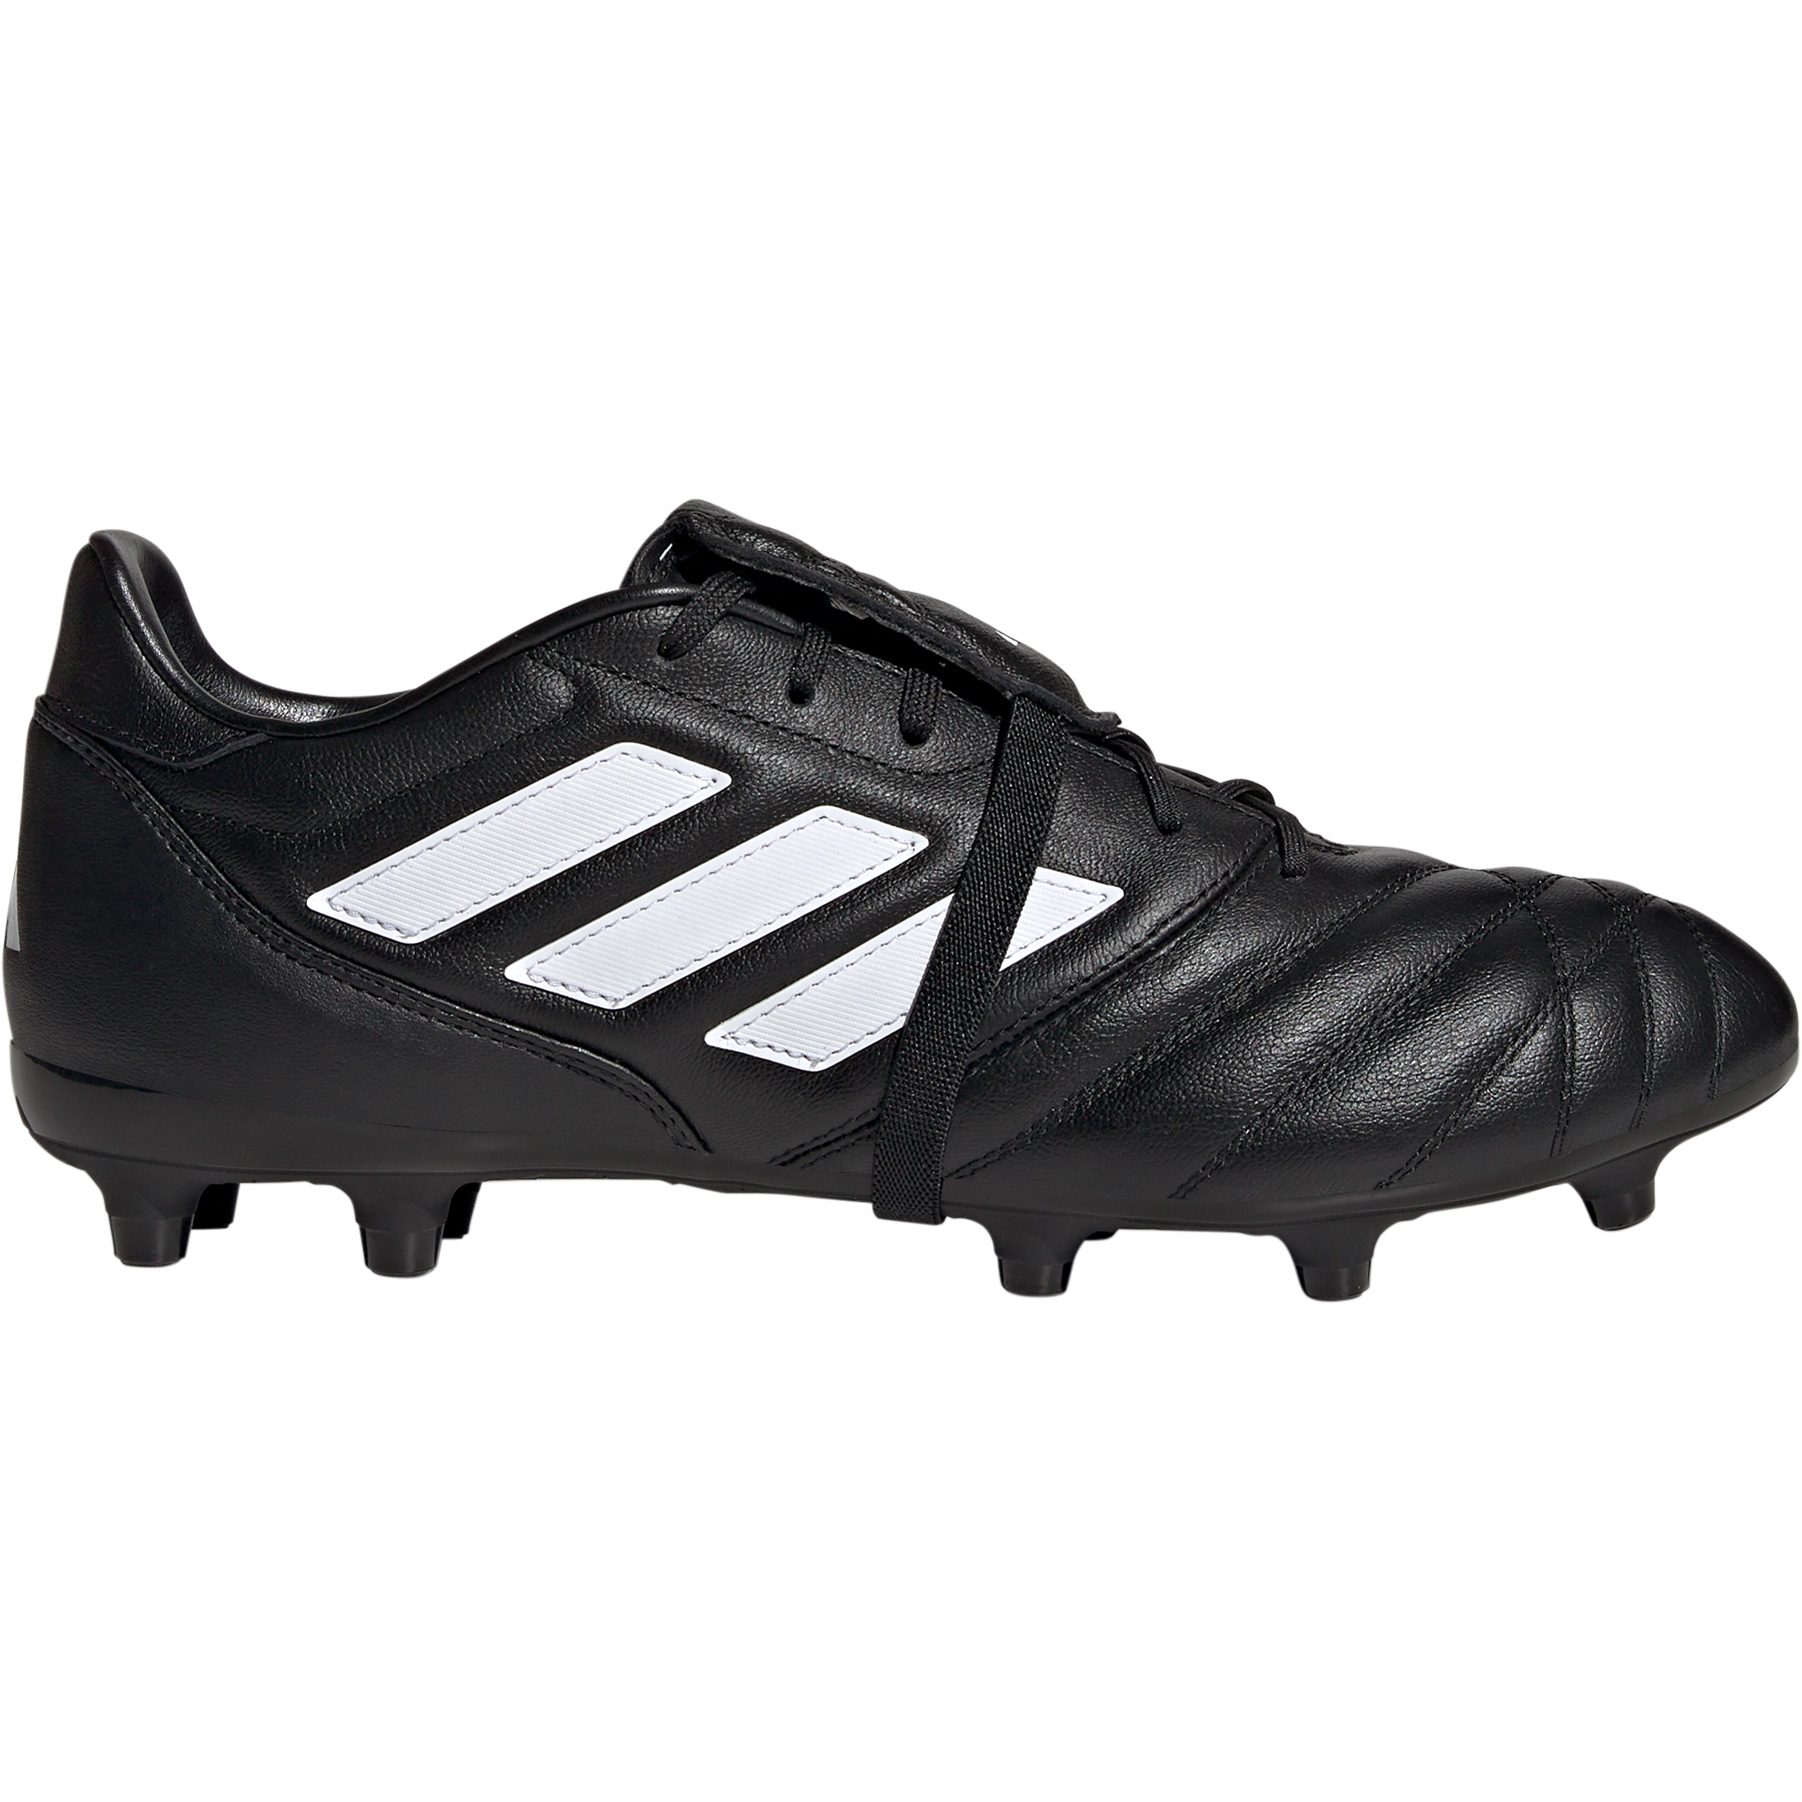 adidas - Copa at core FG black Football Bittl Sport Gloro Shoes Shop